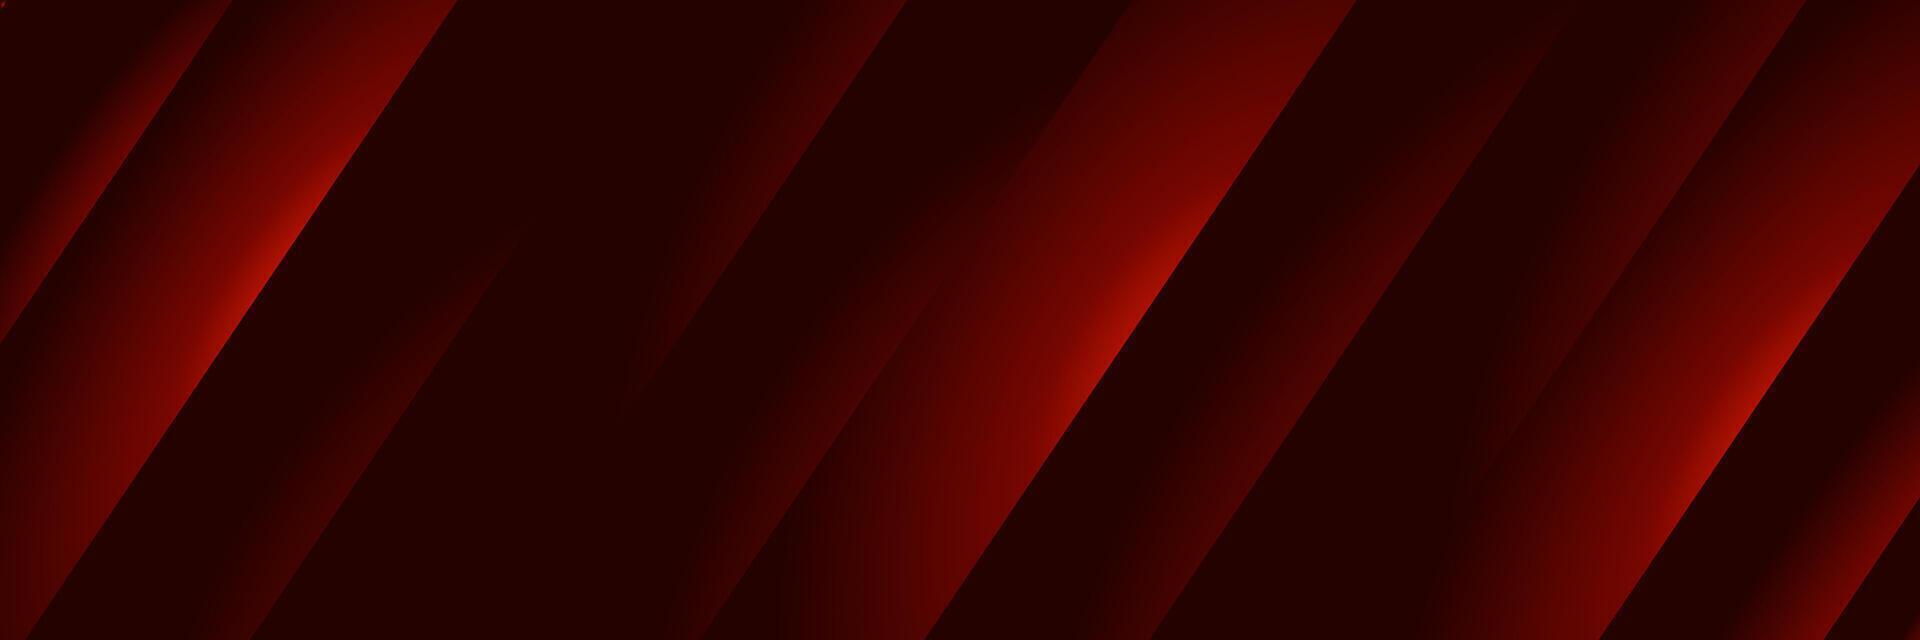 abstract donker rood elegant zakelijke achtergrond vector